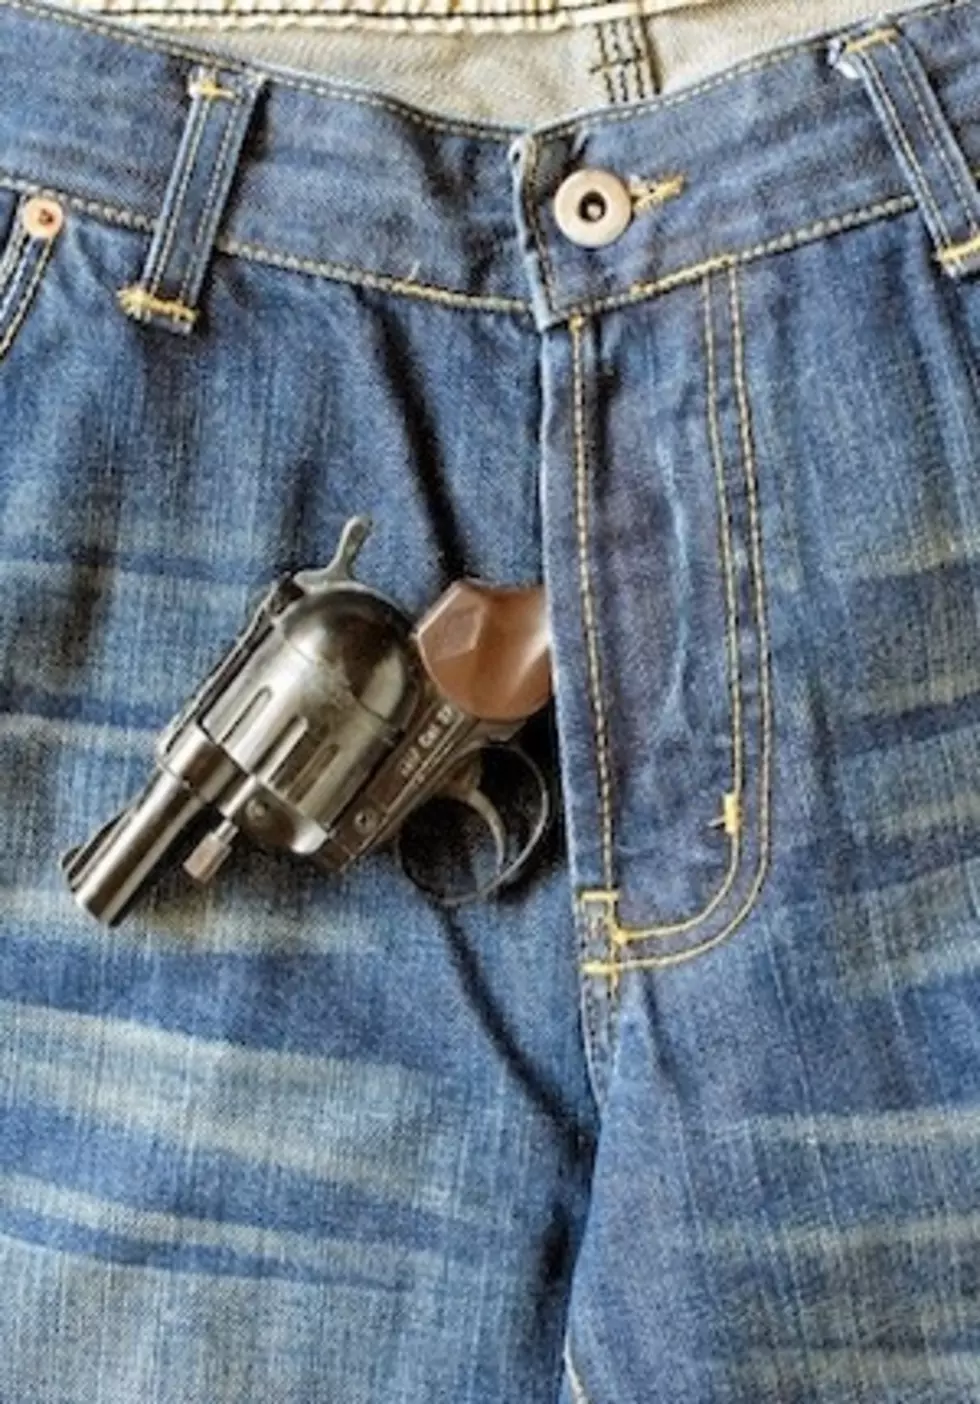 Loaded Gun Misfires in Guy&#8217;s Crotch